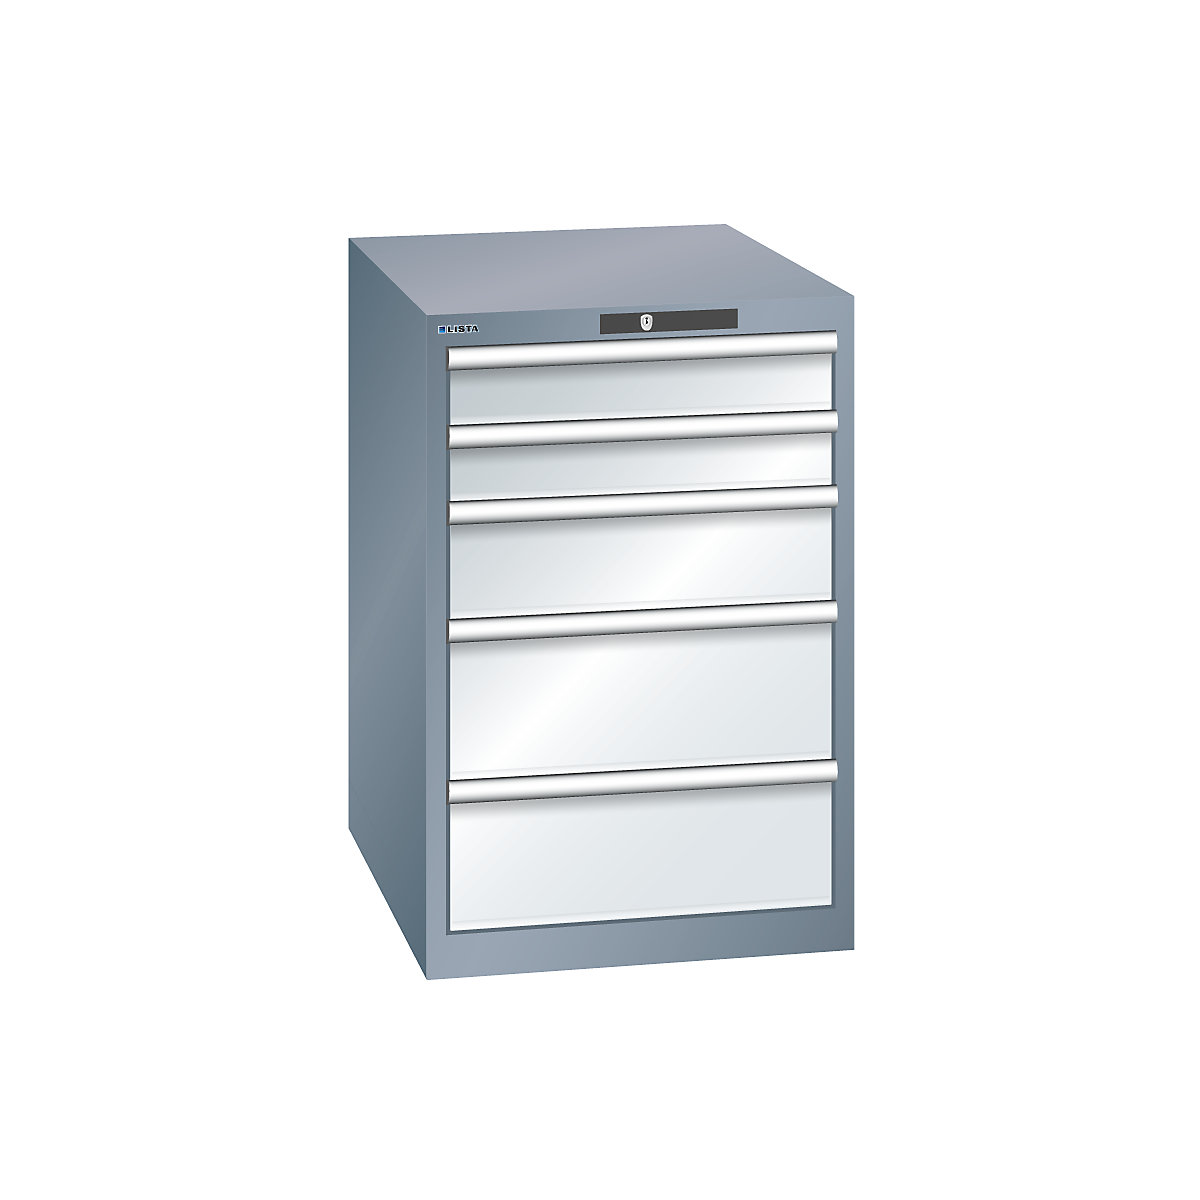 Drawer cupboard, 5 drawers – LISTA, WxDxH 564 x 724 x 850 mm, grey metallic / light grey-2